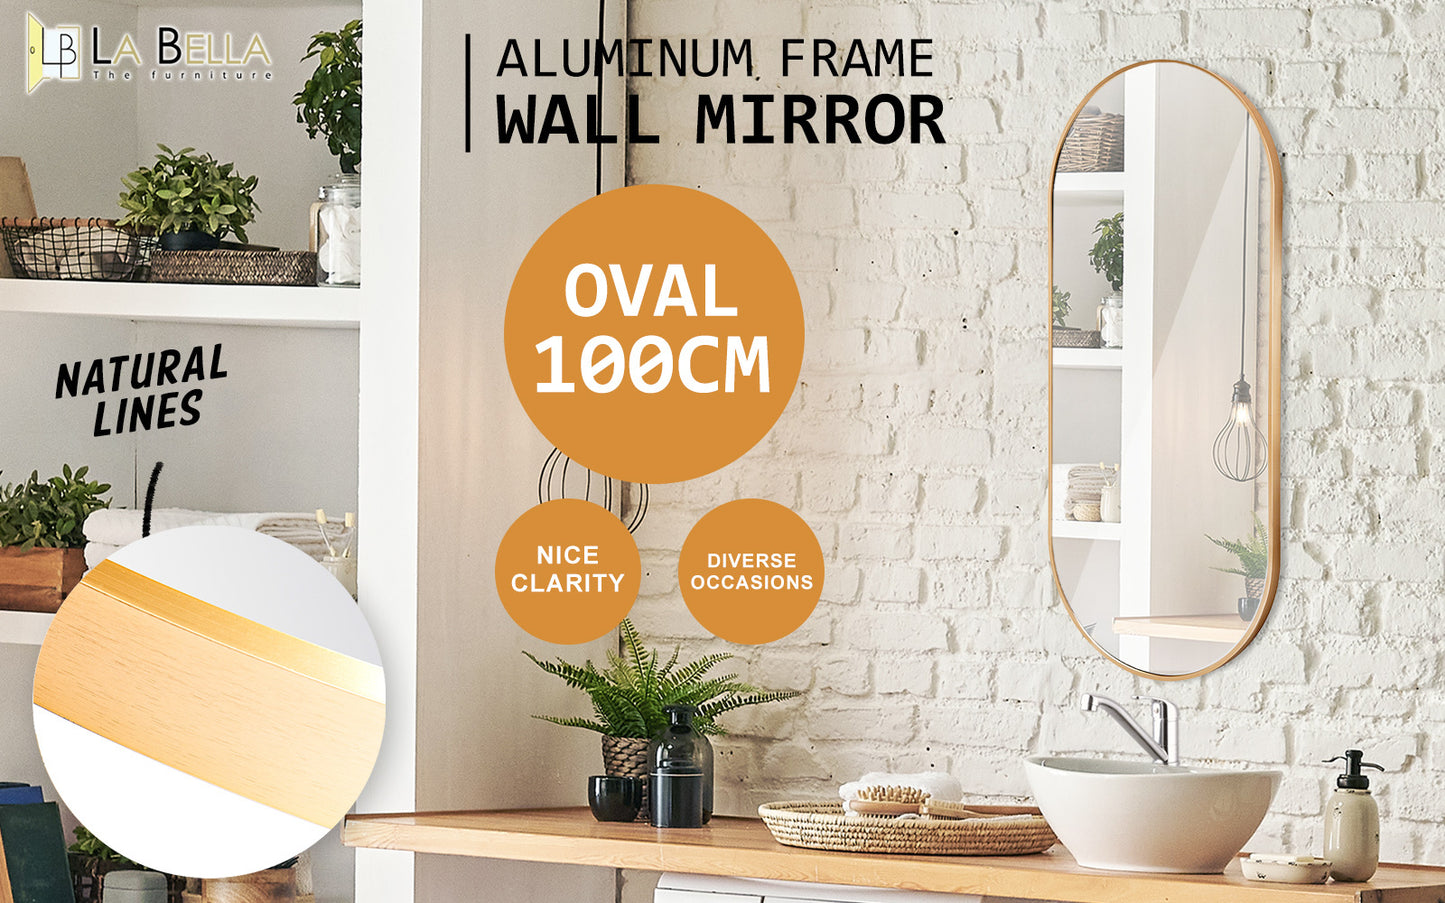 Gold Wall Mirror Oval Aluminum Frame Makeup Decor Bathroom Vanity 45 x 100cm - image2